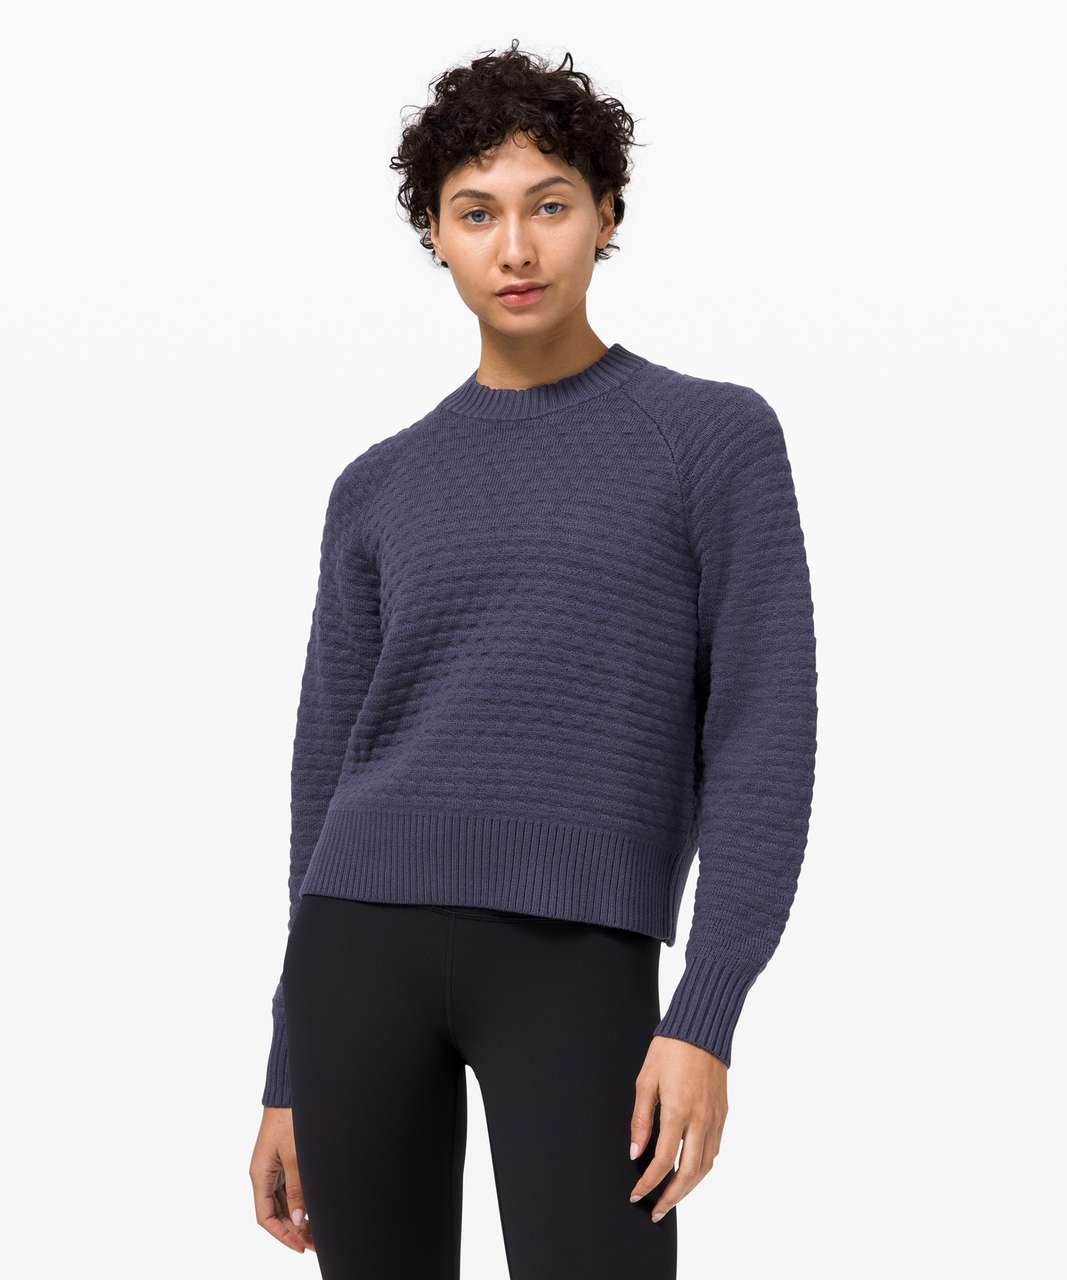 lululemon athletica Textured Knit Crewneck Sweater - Color Blue